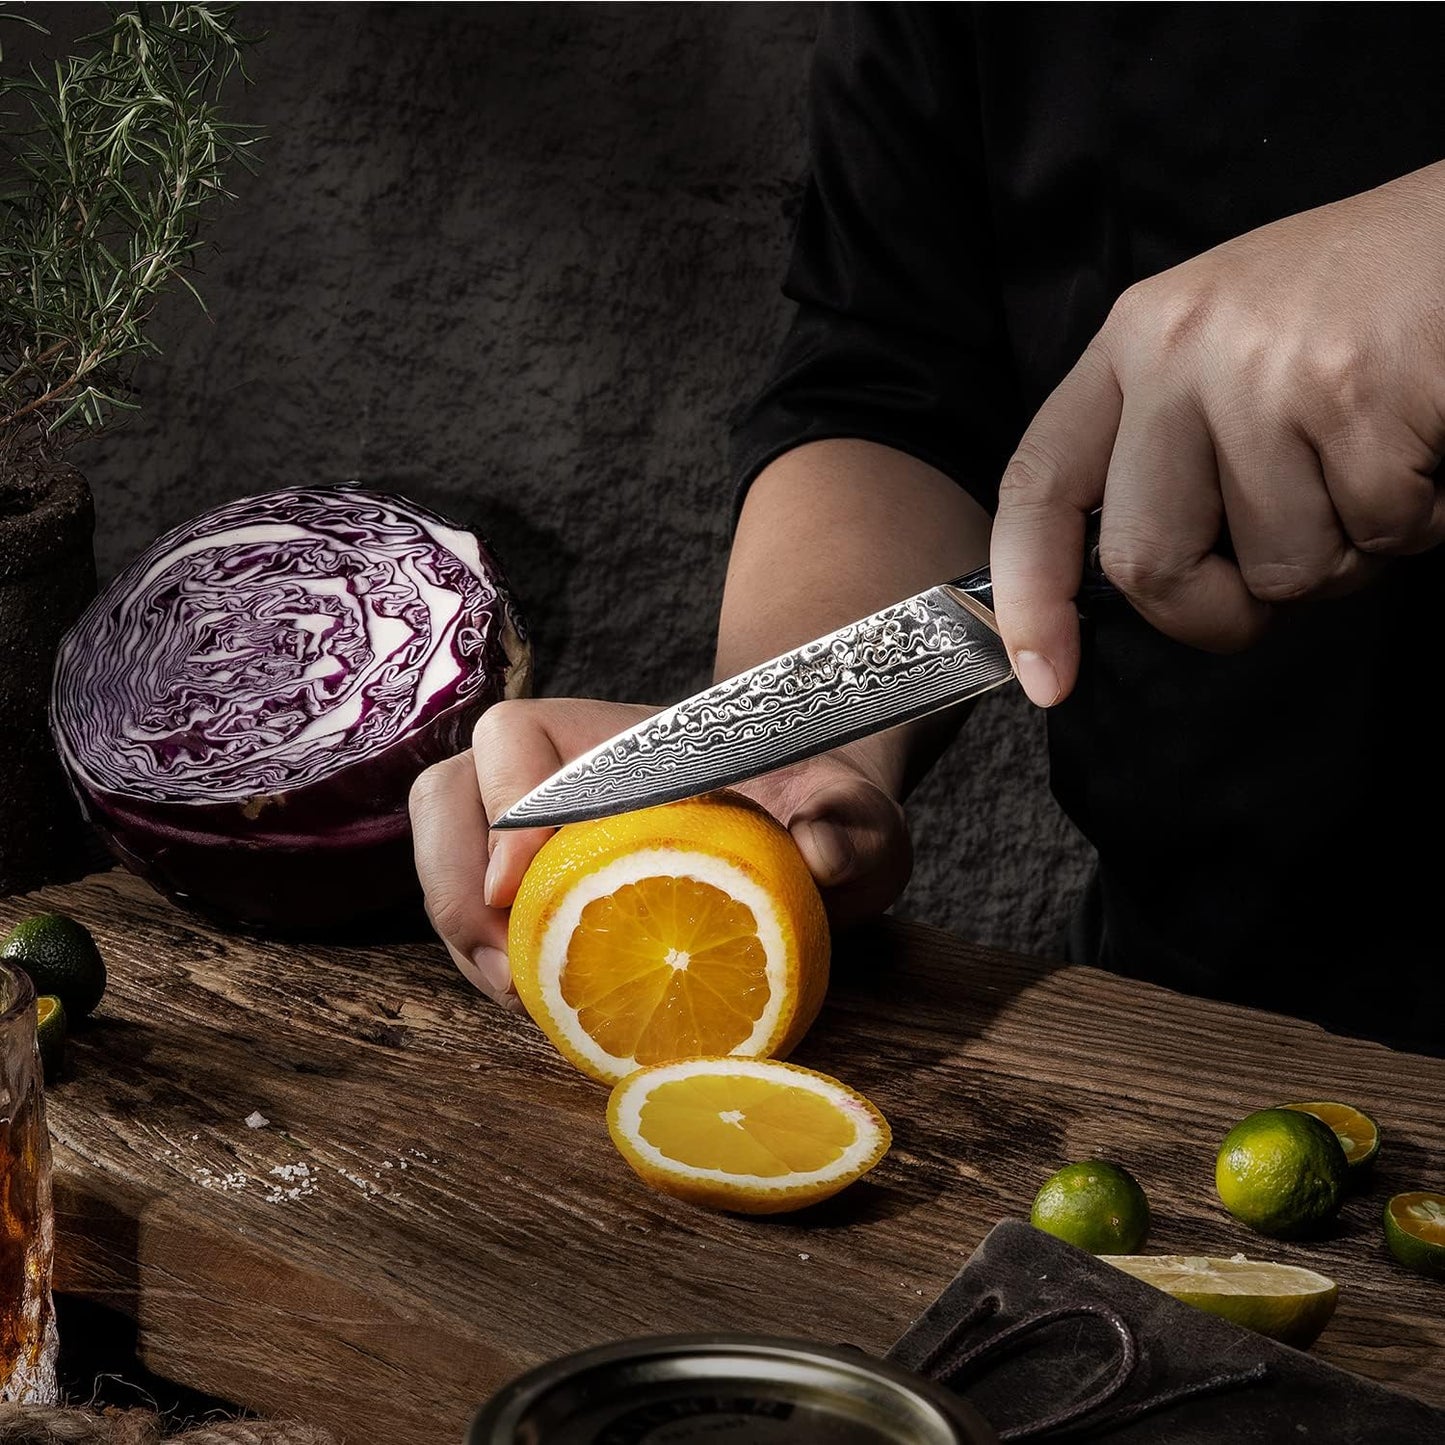 KD 5" Utility Knife Damascus VG10 67 Layer Kitchen Chef Knife